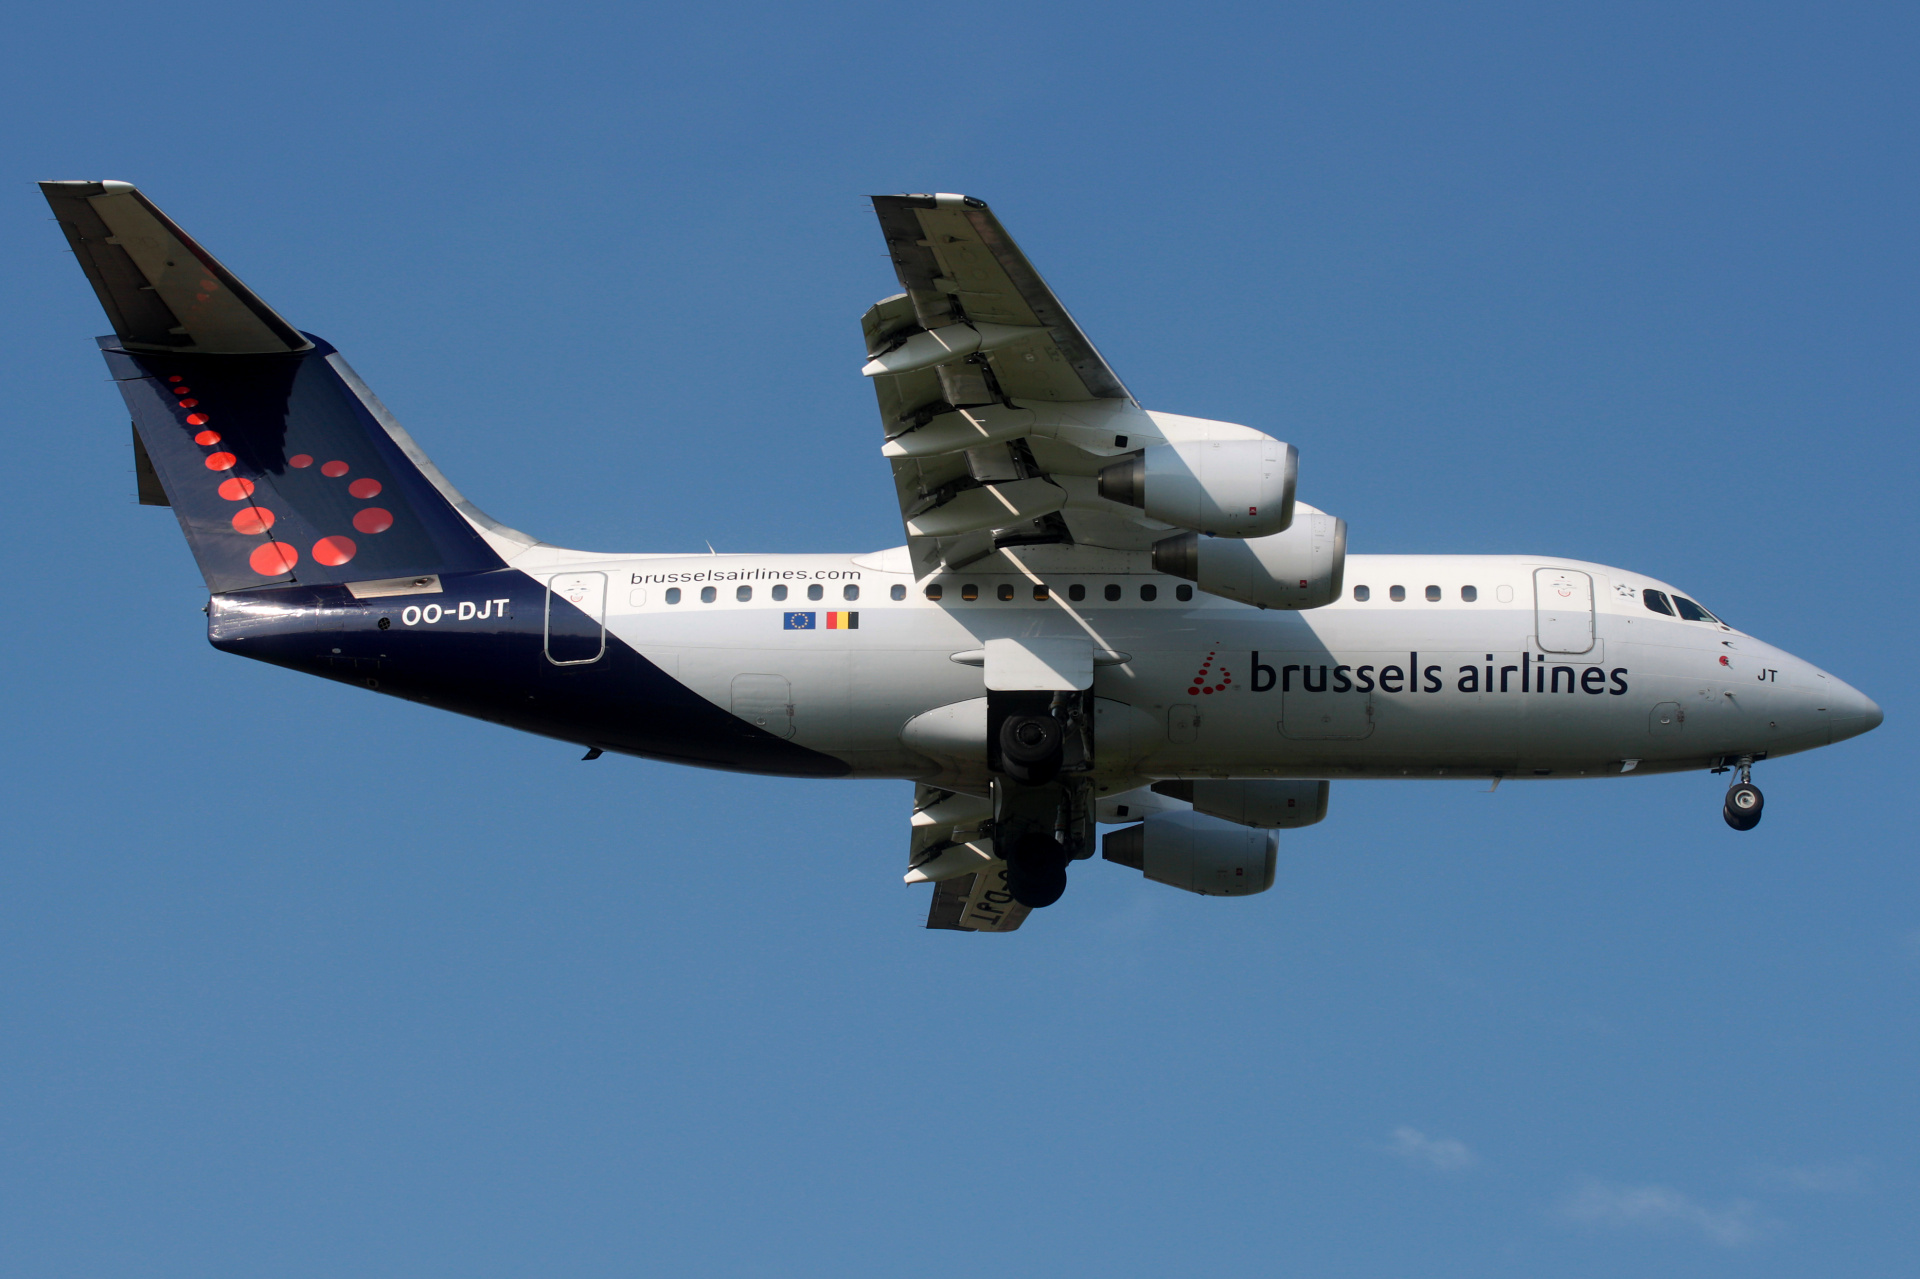 OO-DJT (Samoloty » Spotting na EPWA » BAe 146 i pochodne wersje » Avro RJ85 » Brussels Airlines)